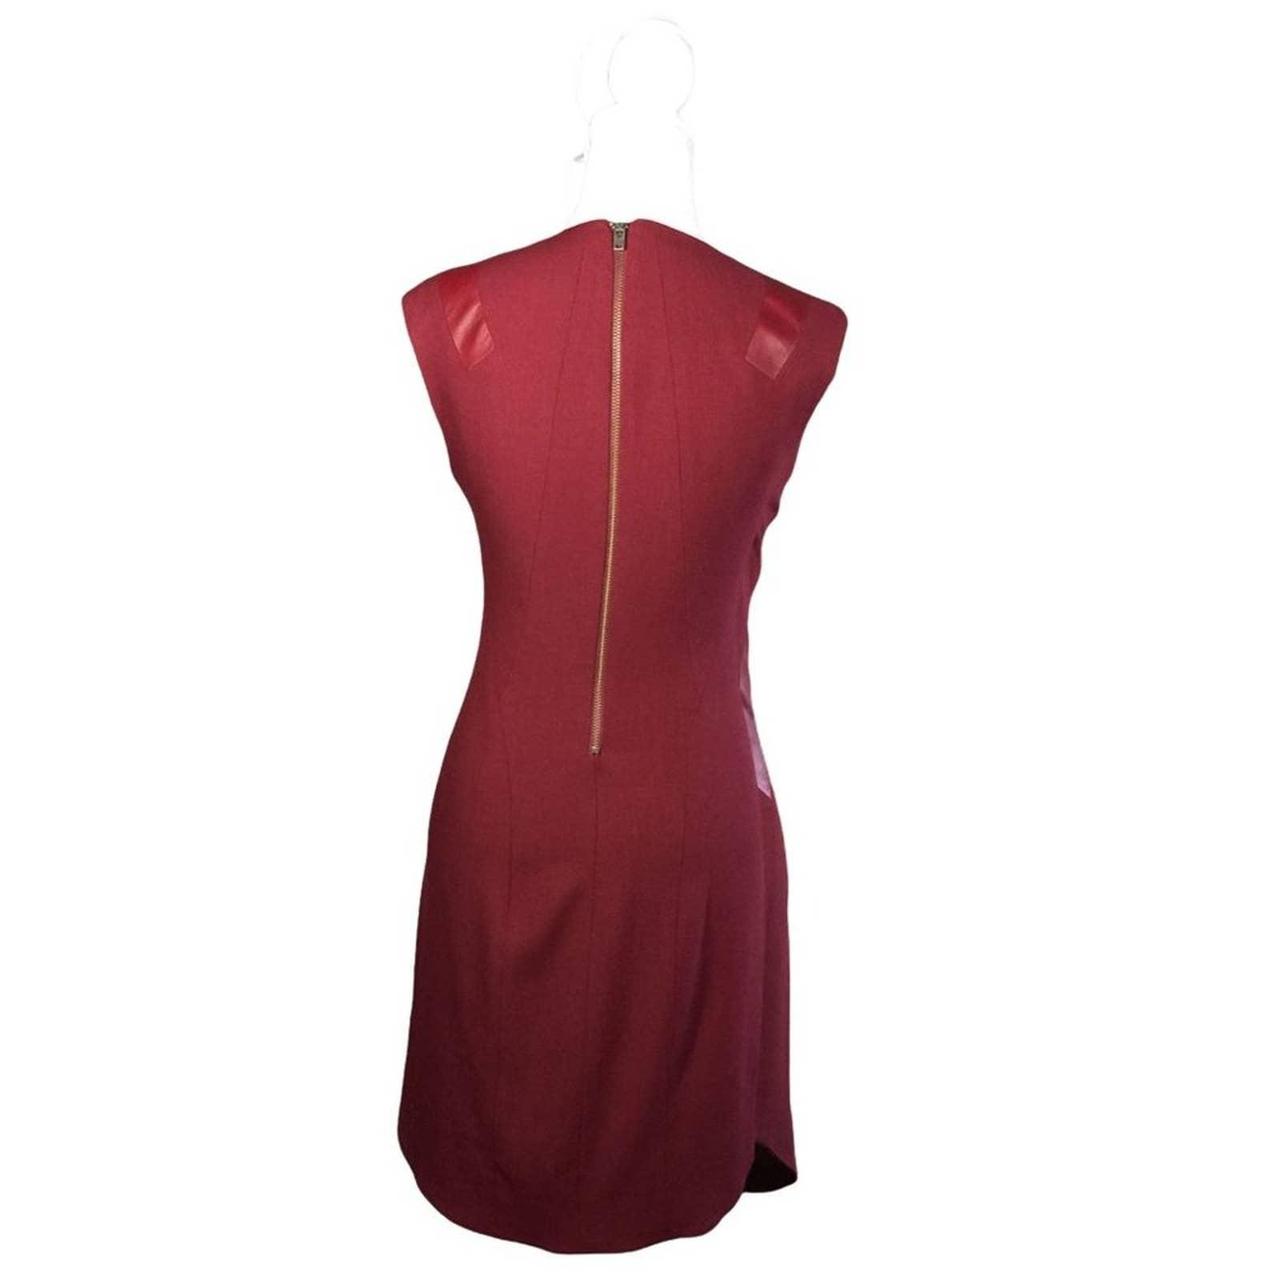 Product Image 3 - HELMUT LANG pxl dress burgundy